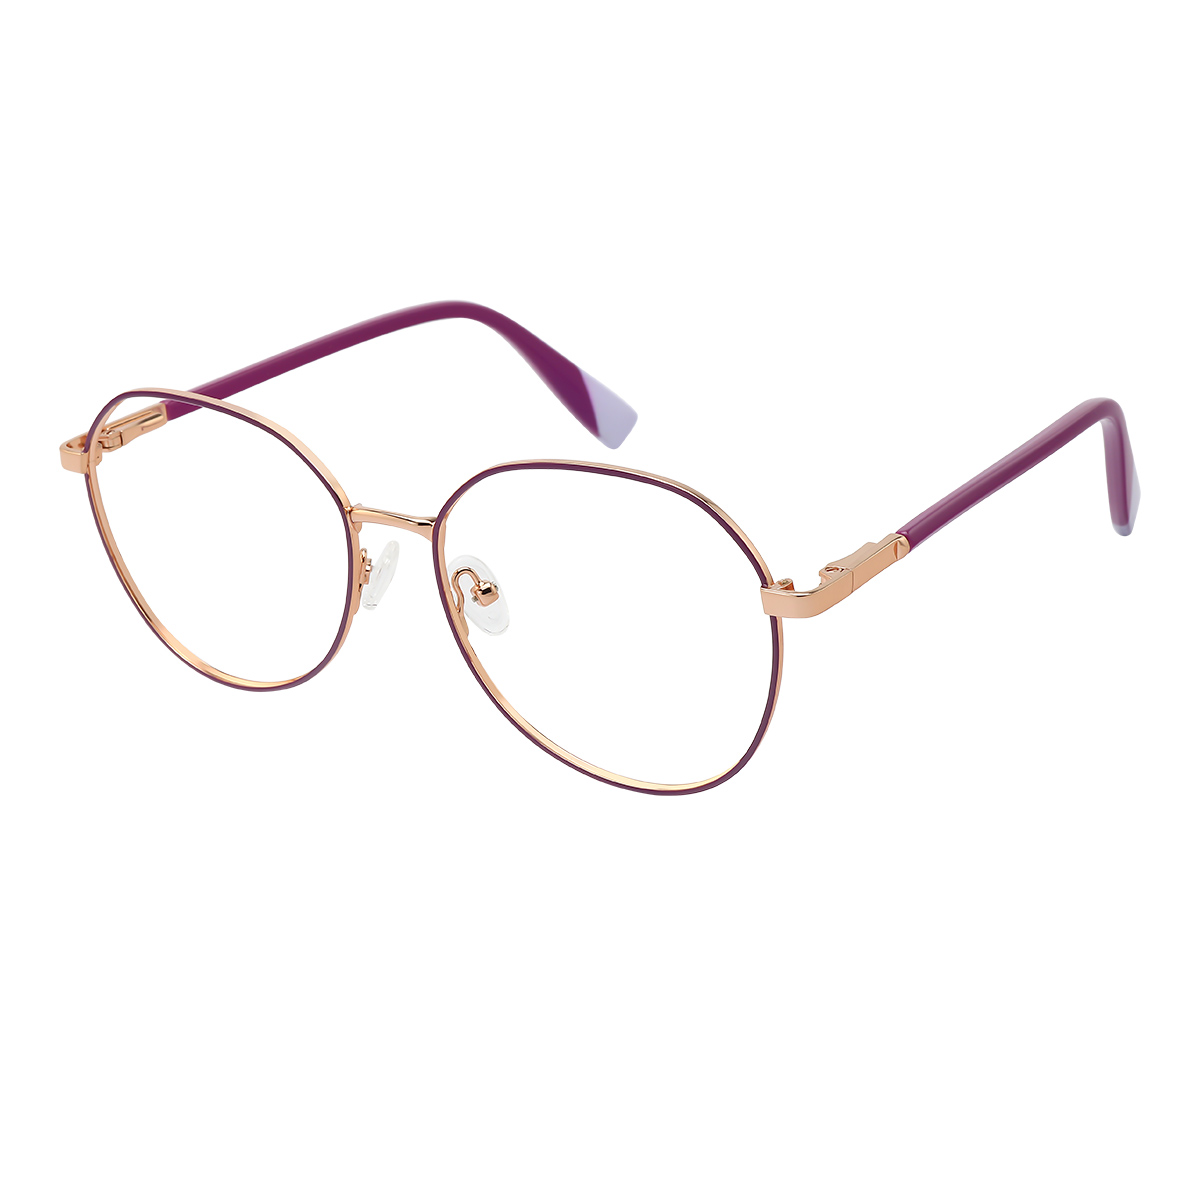 Dot - Round Purple/Gold Reading Glasses for Women